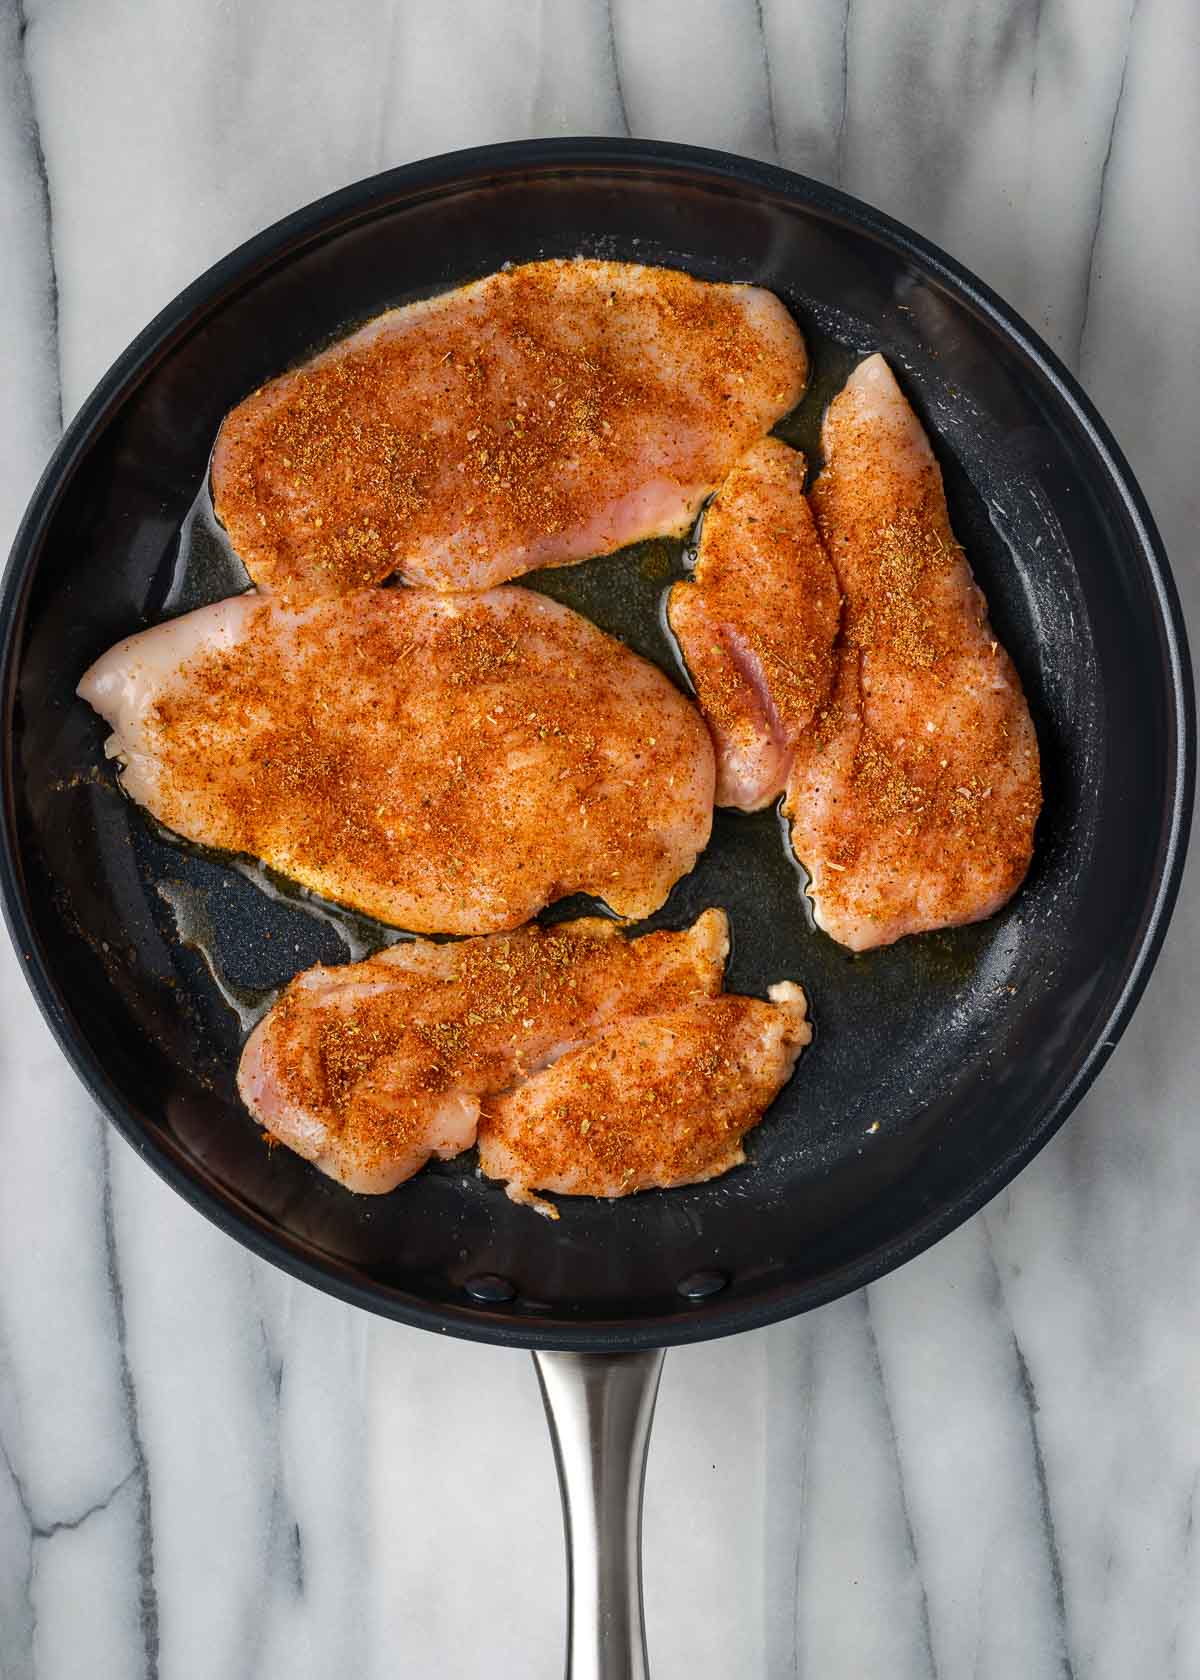 seared chicken in skillet